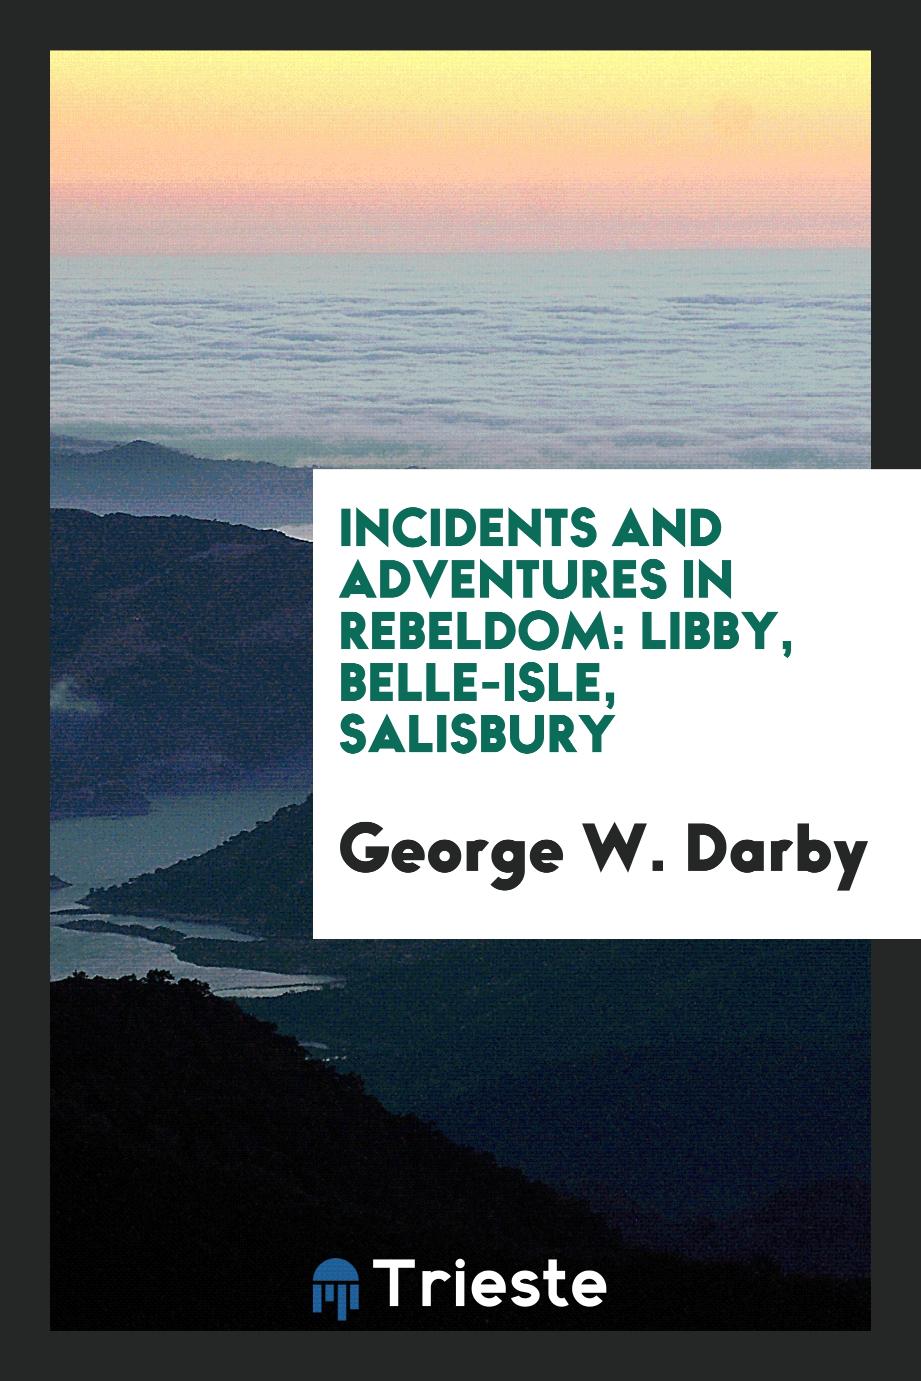 Incidents and adventures in rebeldom: Libby, Belle-Isle, Salisbury